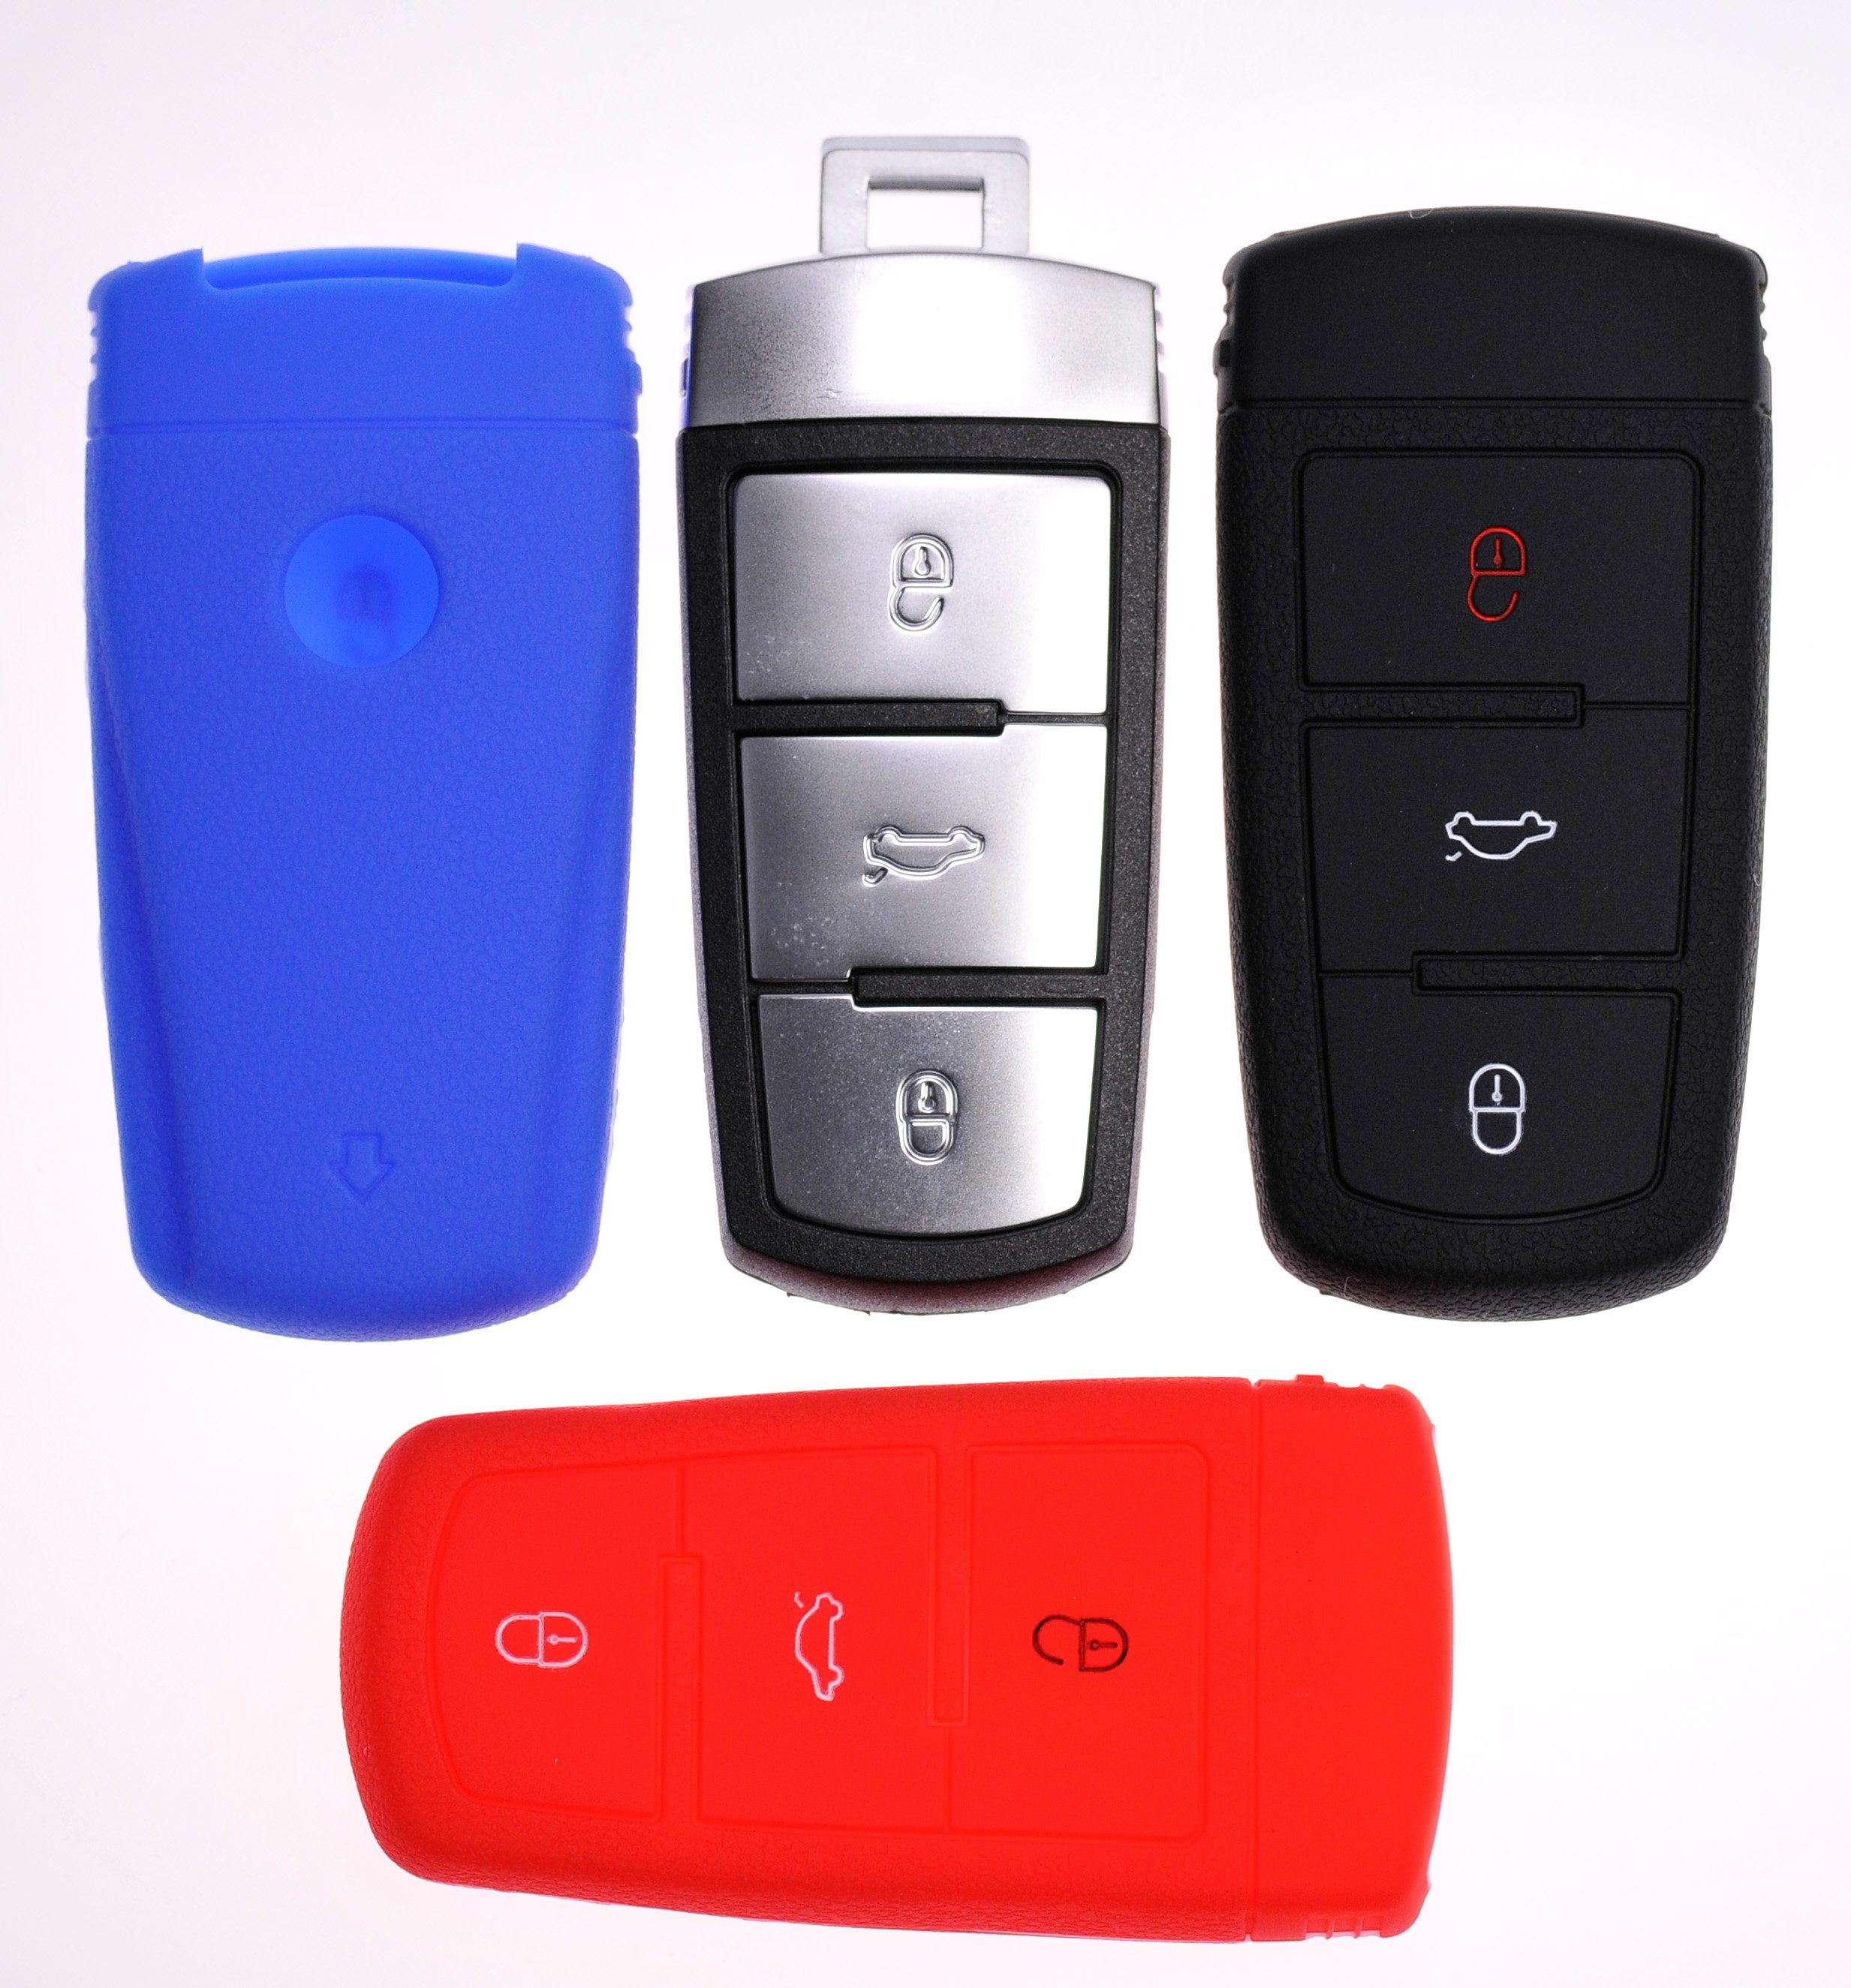 Autoschlüssel B7 Softcase Schutzhülle Rot, Schlüsseltasche Silikon Passat B6 VW 3C CC für Tasten mt-key KEYLESS 3 SMARTKEY